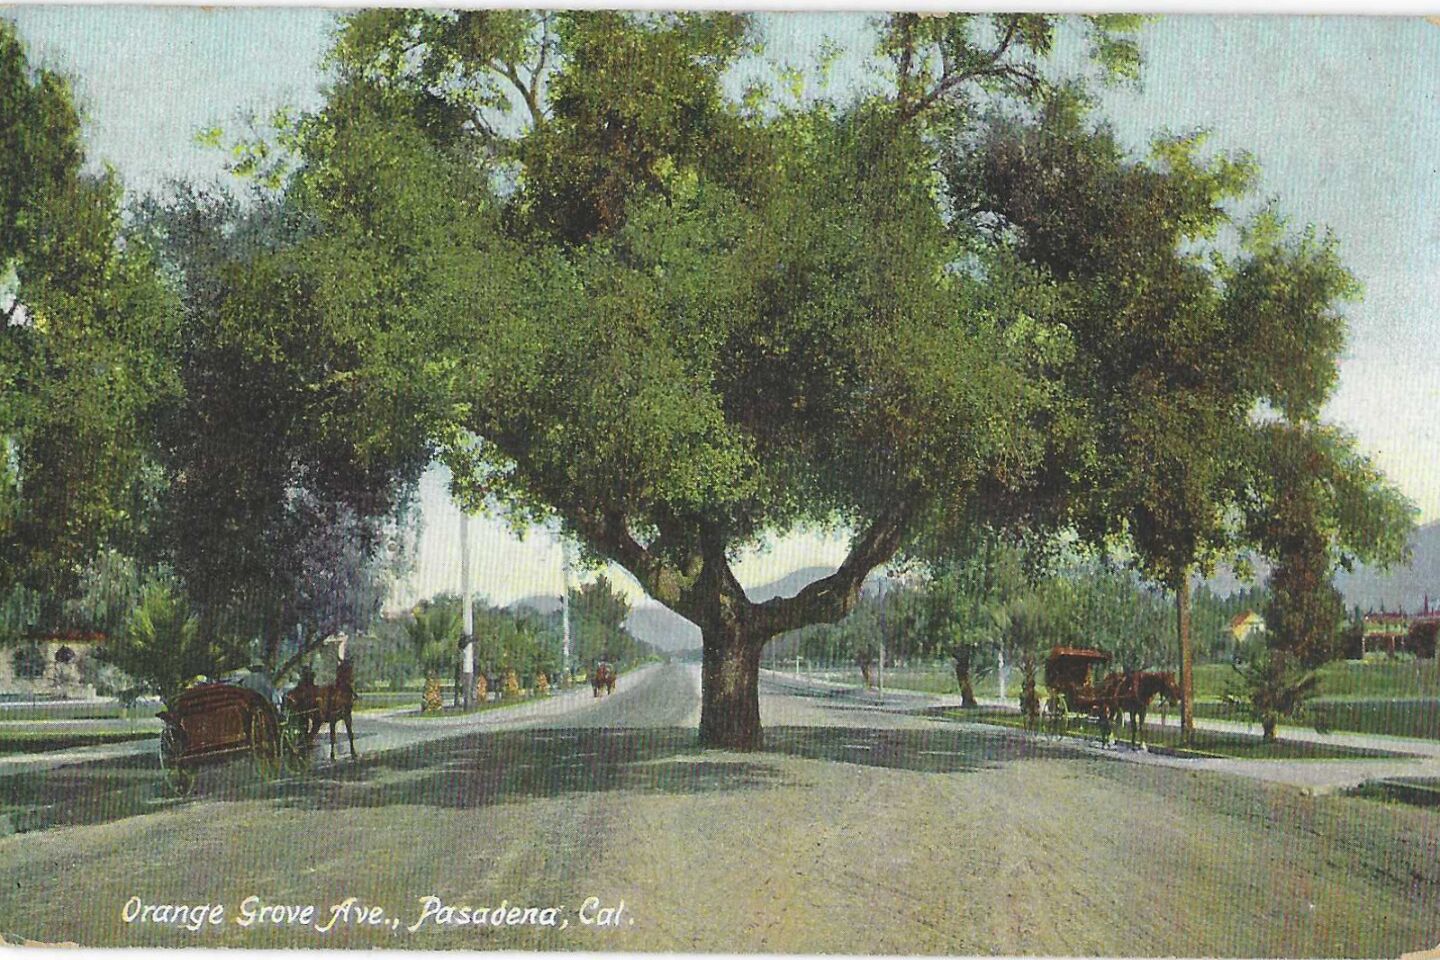 Orange Grove Ave., Pasadena, Cal.